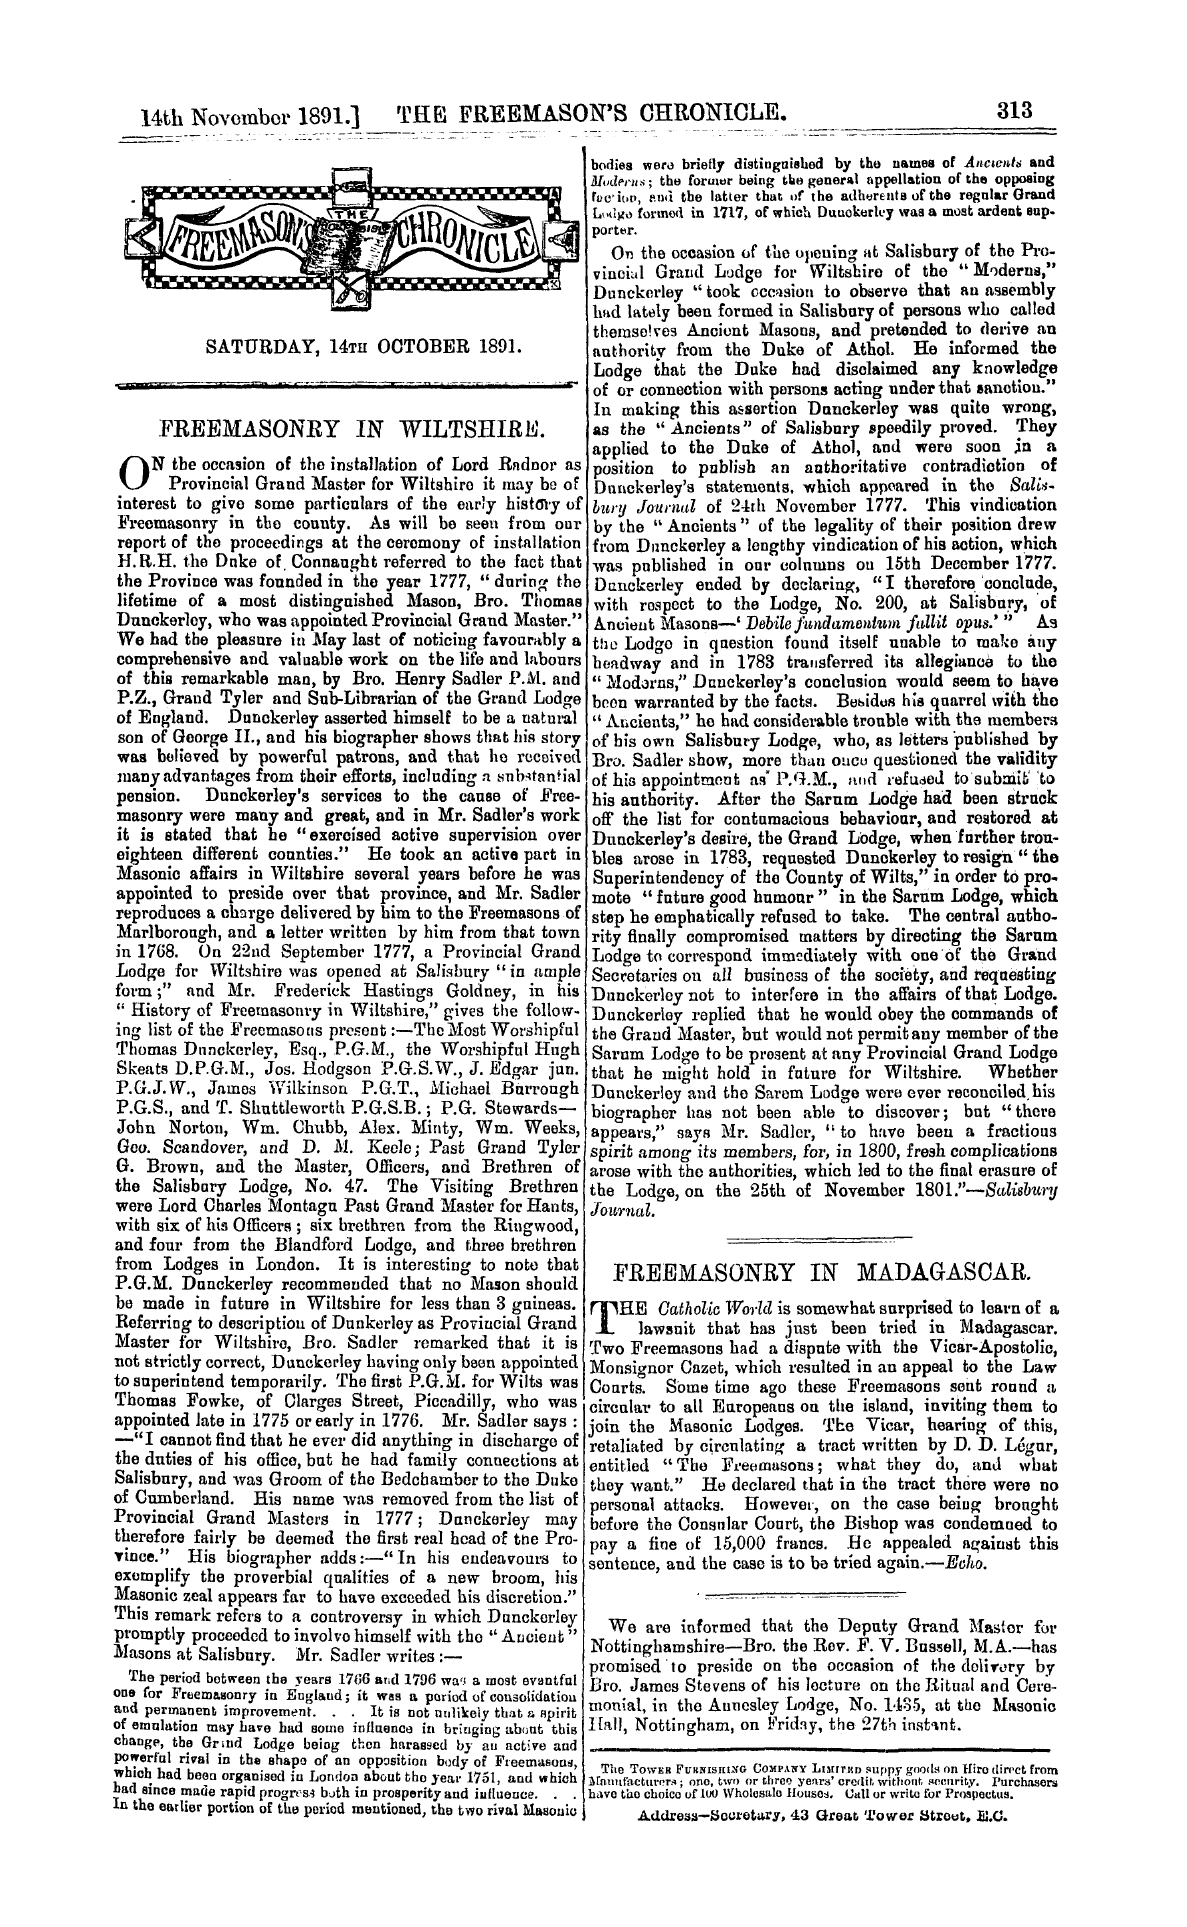 The Freemason's Chronicle: 1891-11-14 - Freemasonry In Madagascar.